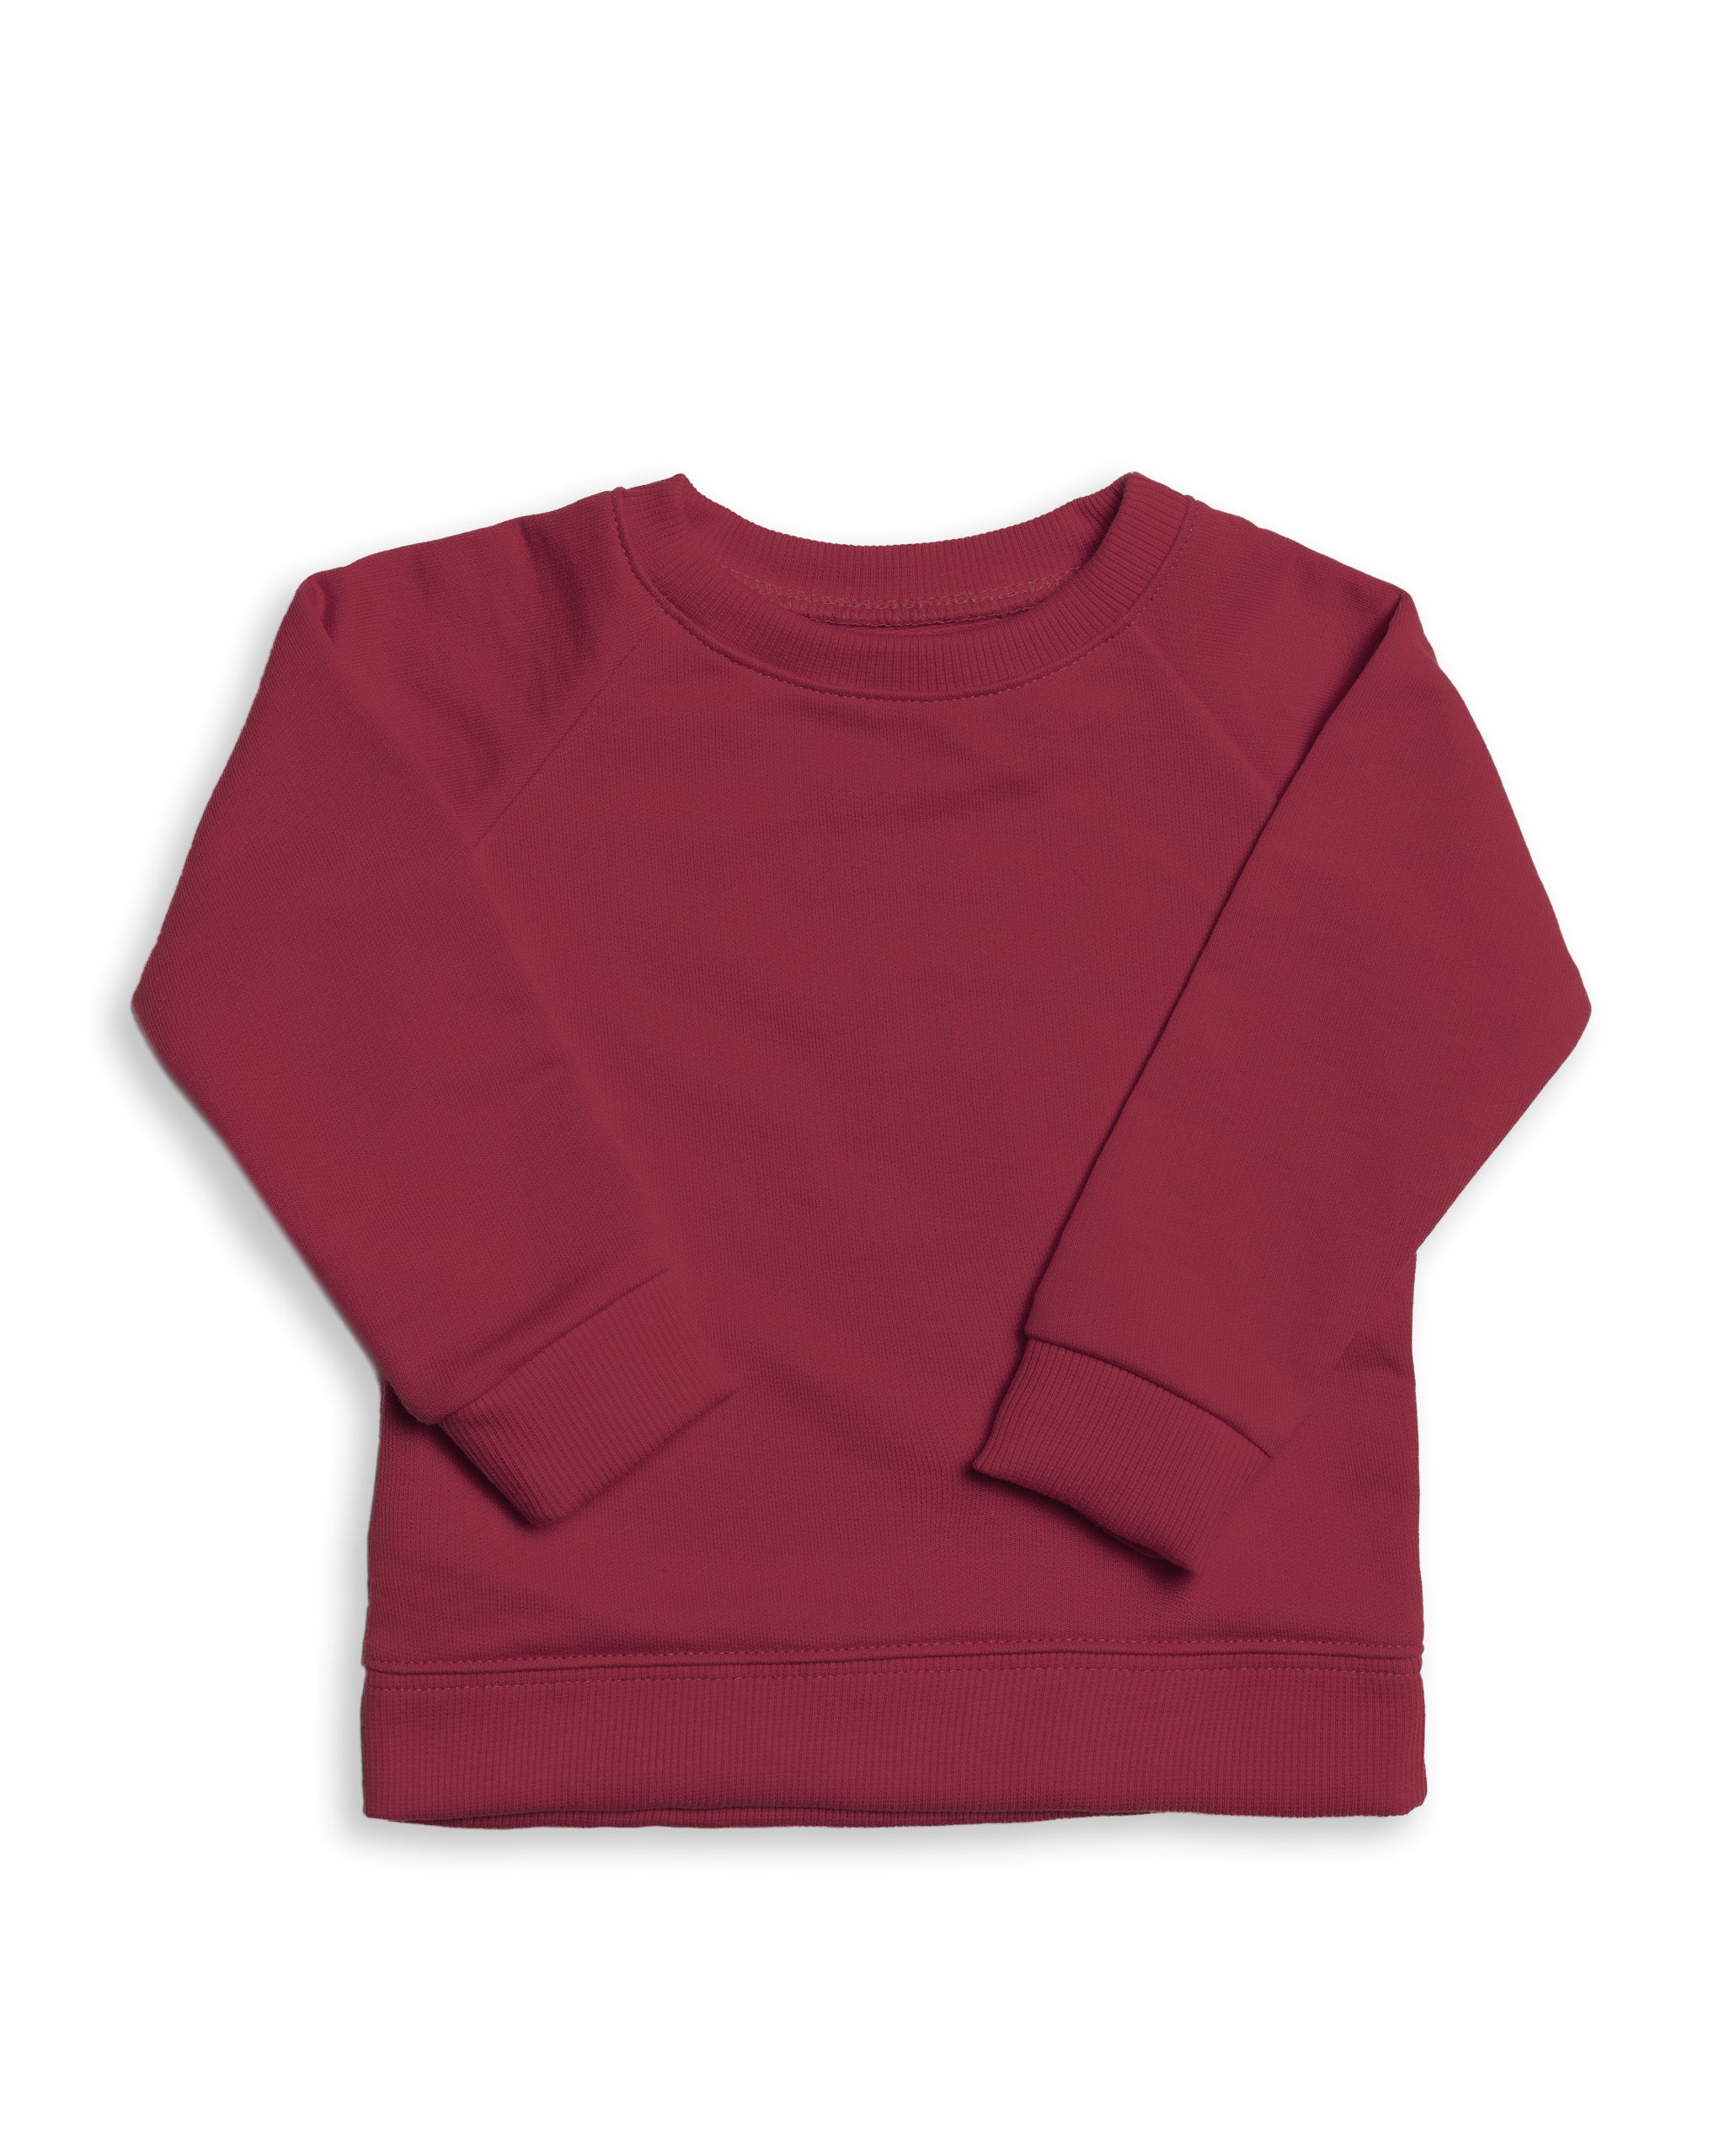 The Organic Pullover Sweatshirt [Cranberry]